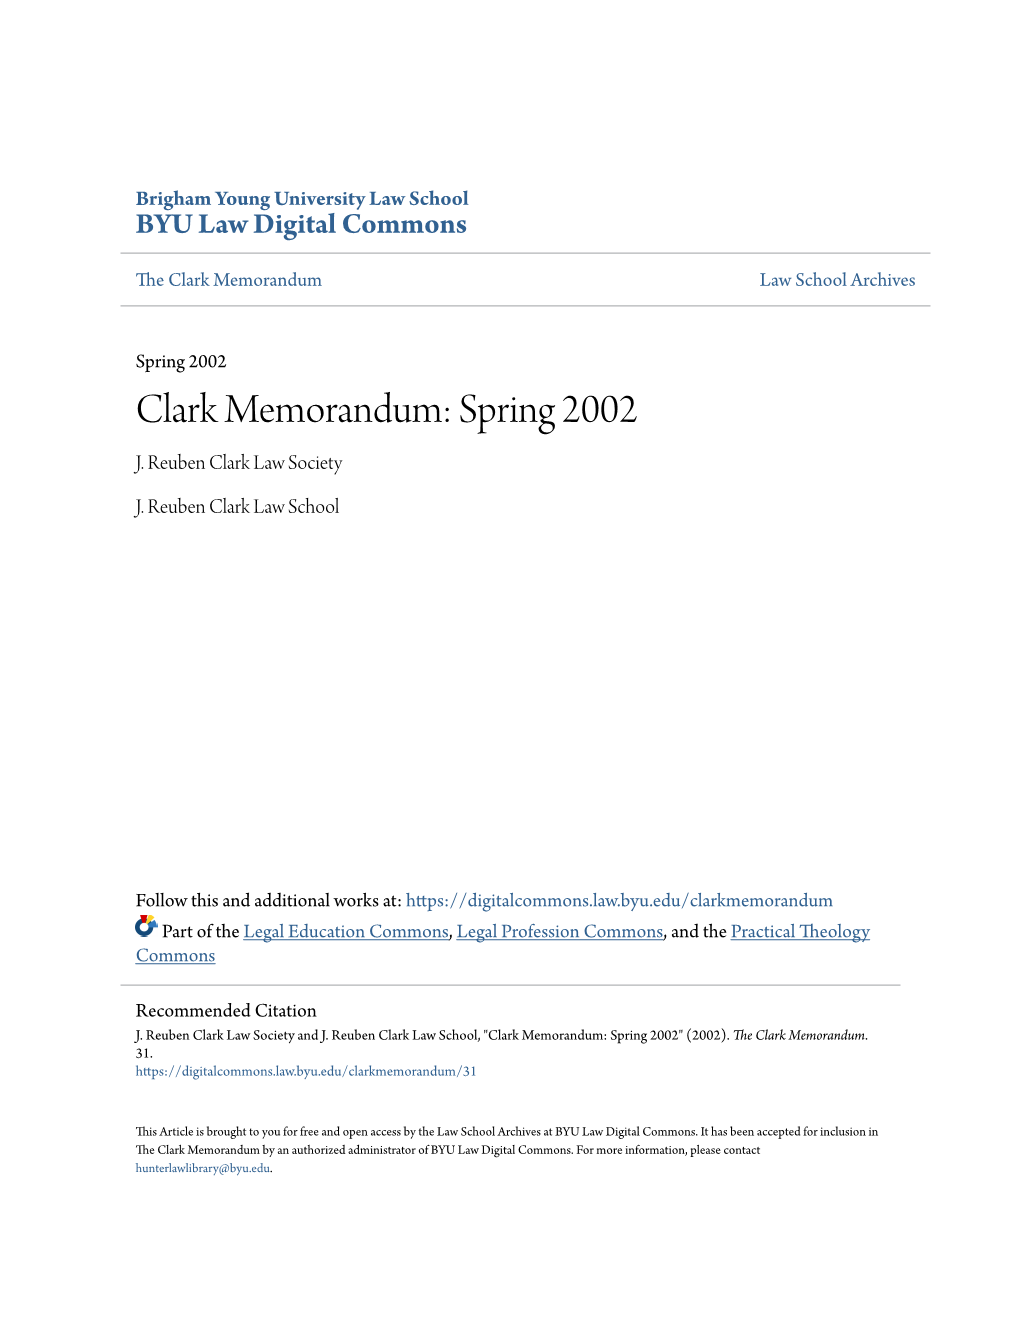 Clark Memorandum: Spring 2002 J